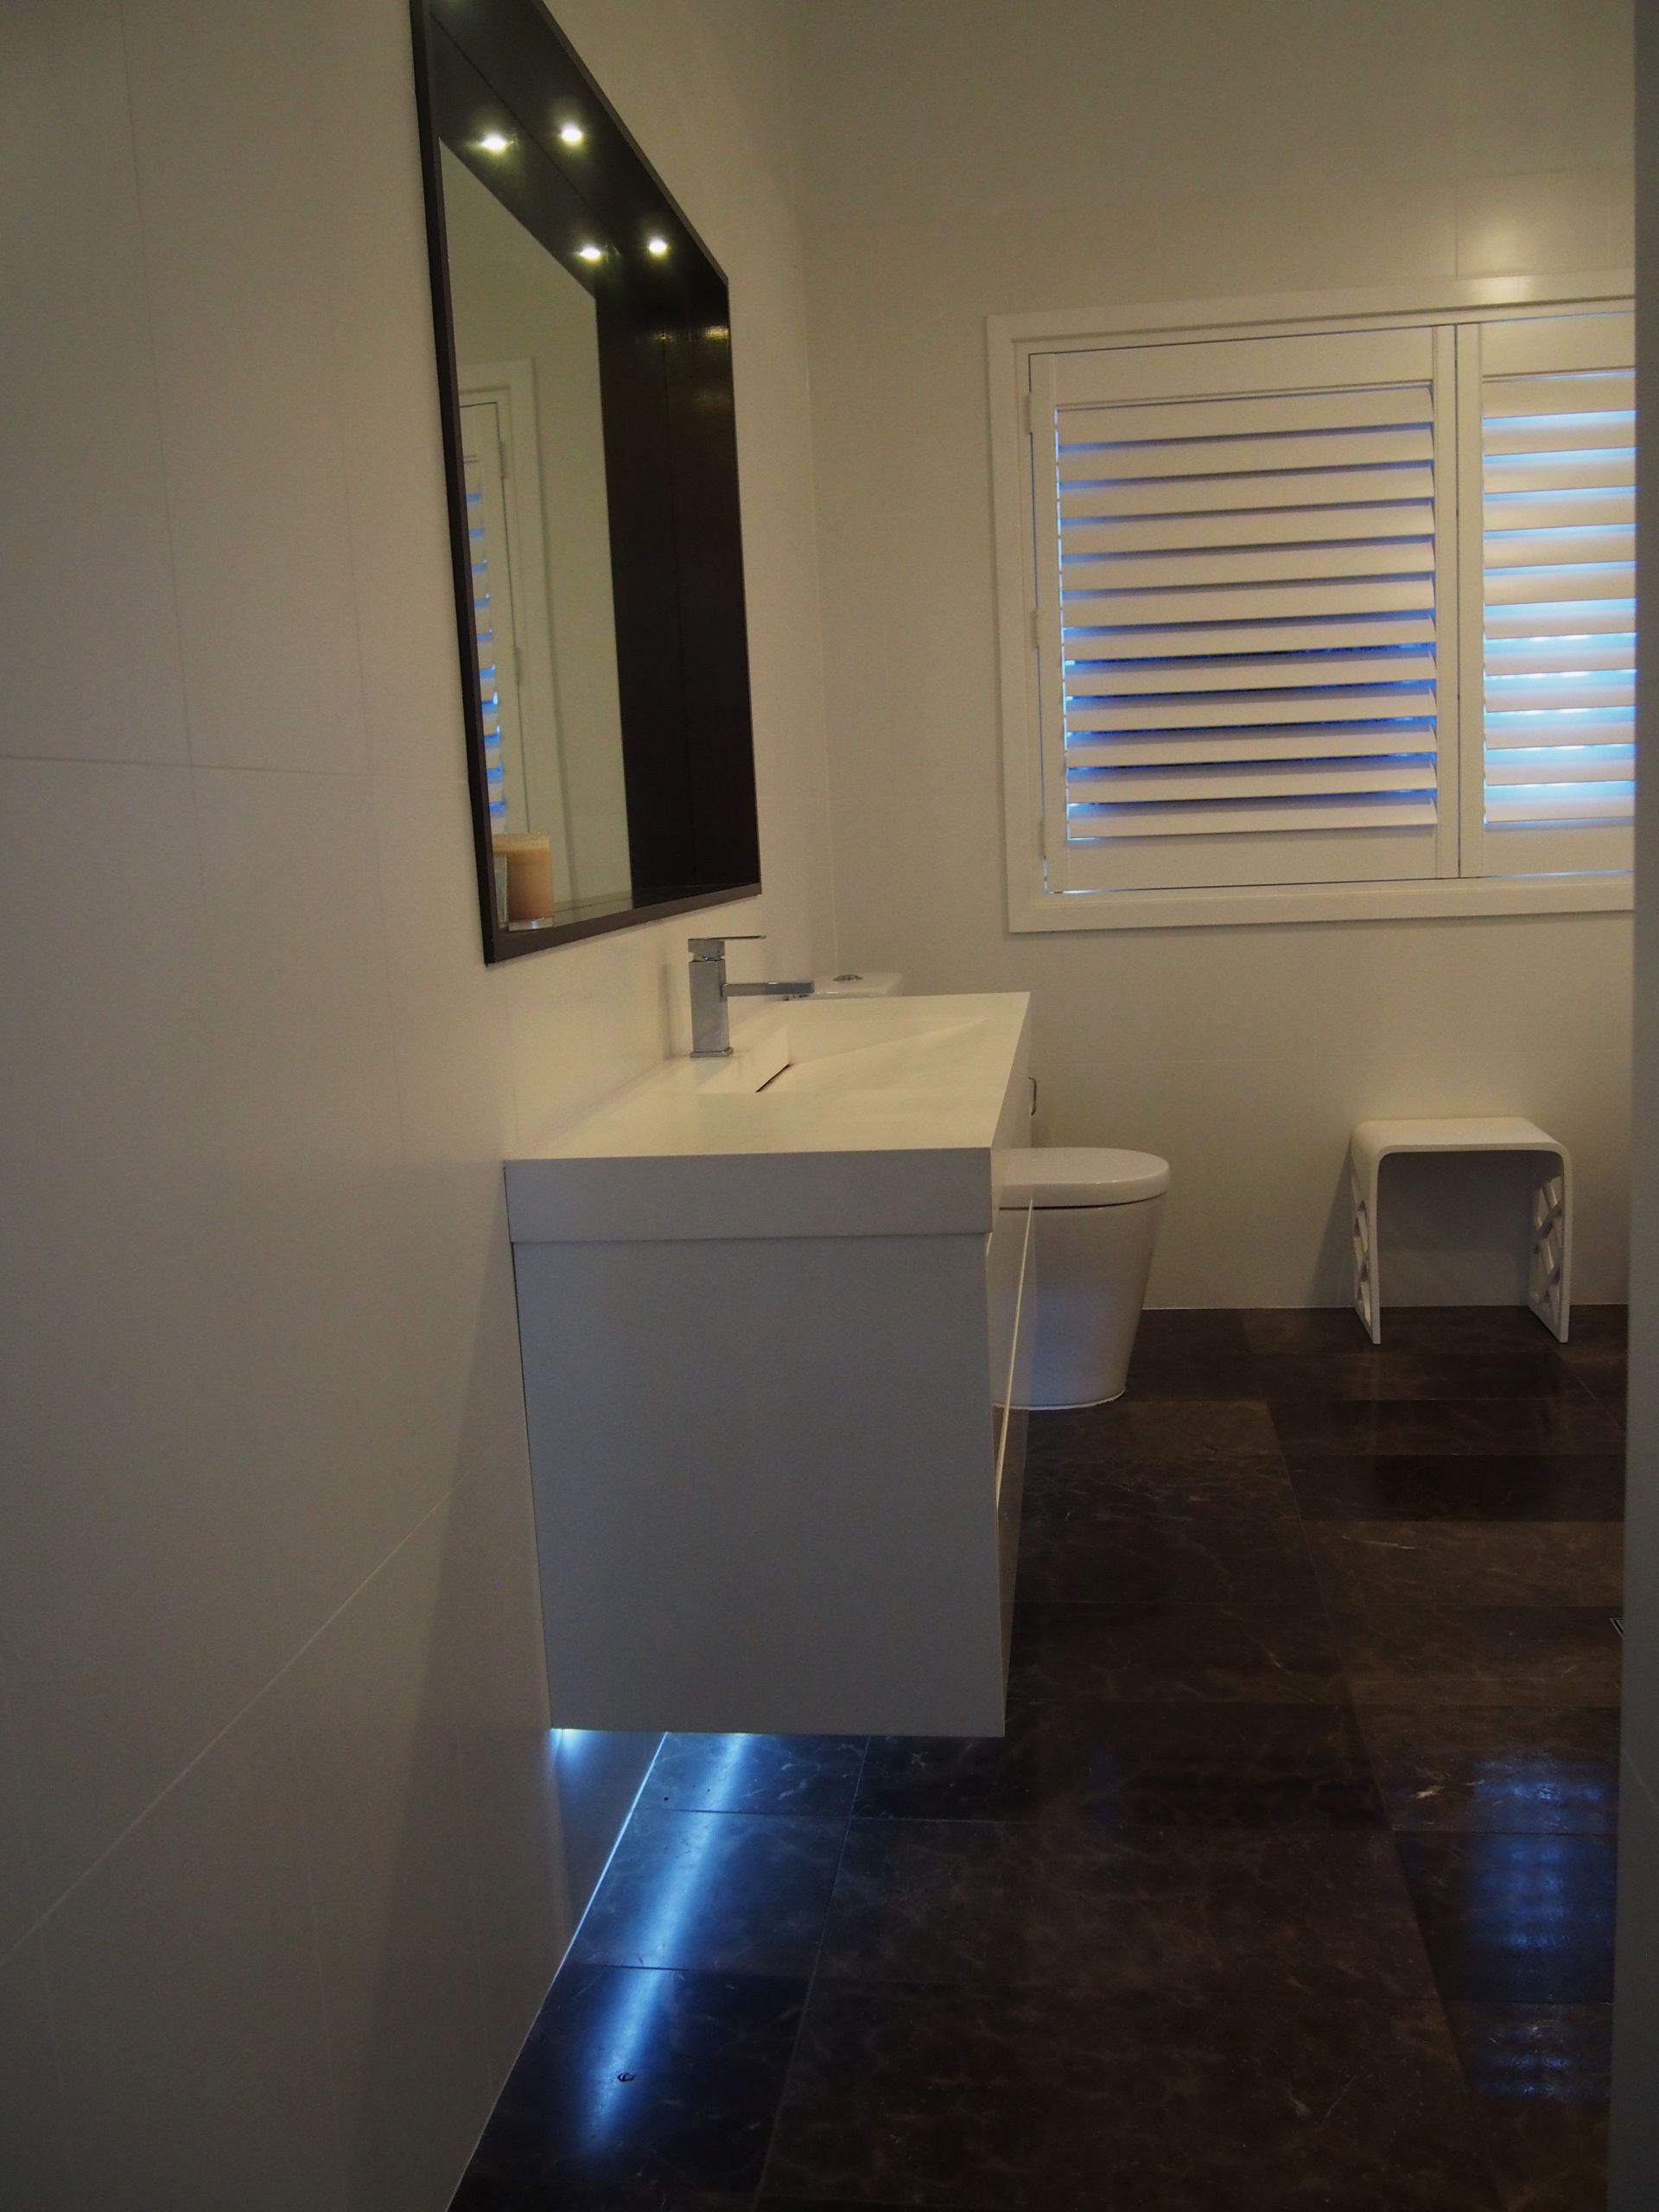 Recessed Lighting Over Bathroom Vanity
 Bathroom lighting LED recessed mirror lights & under